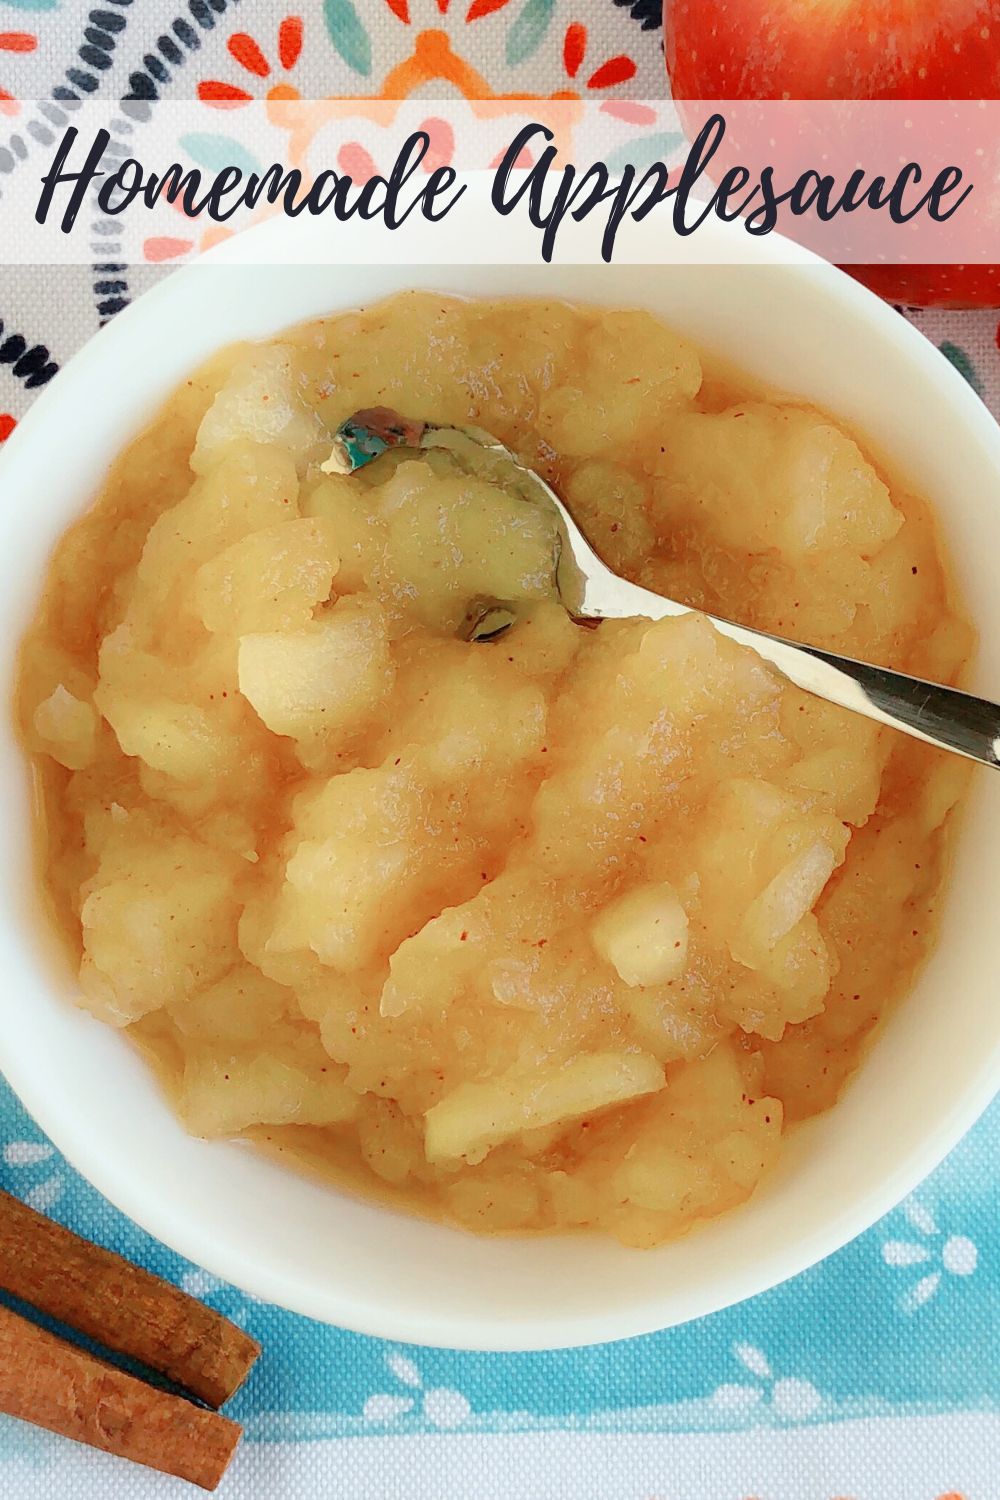 homemade applesauce in a white bowl